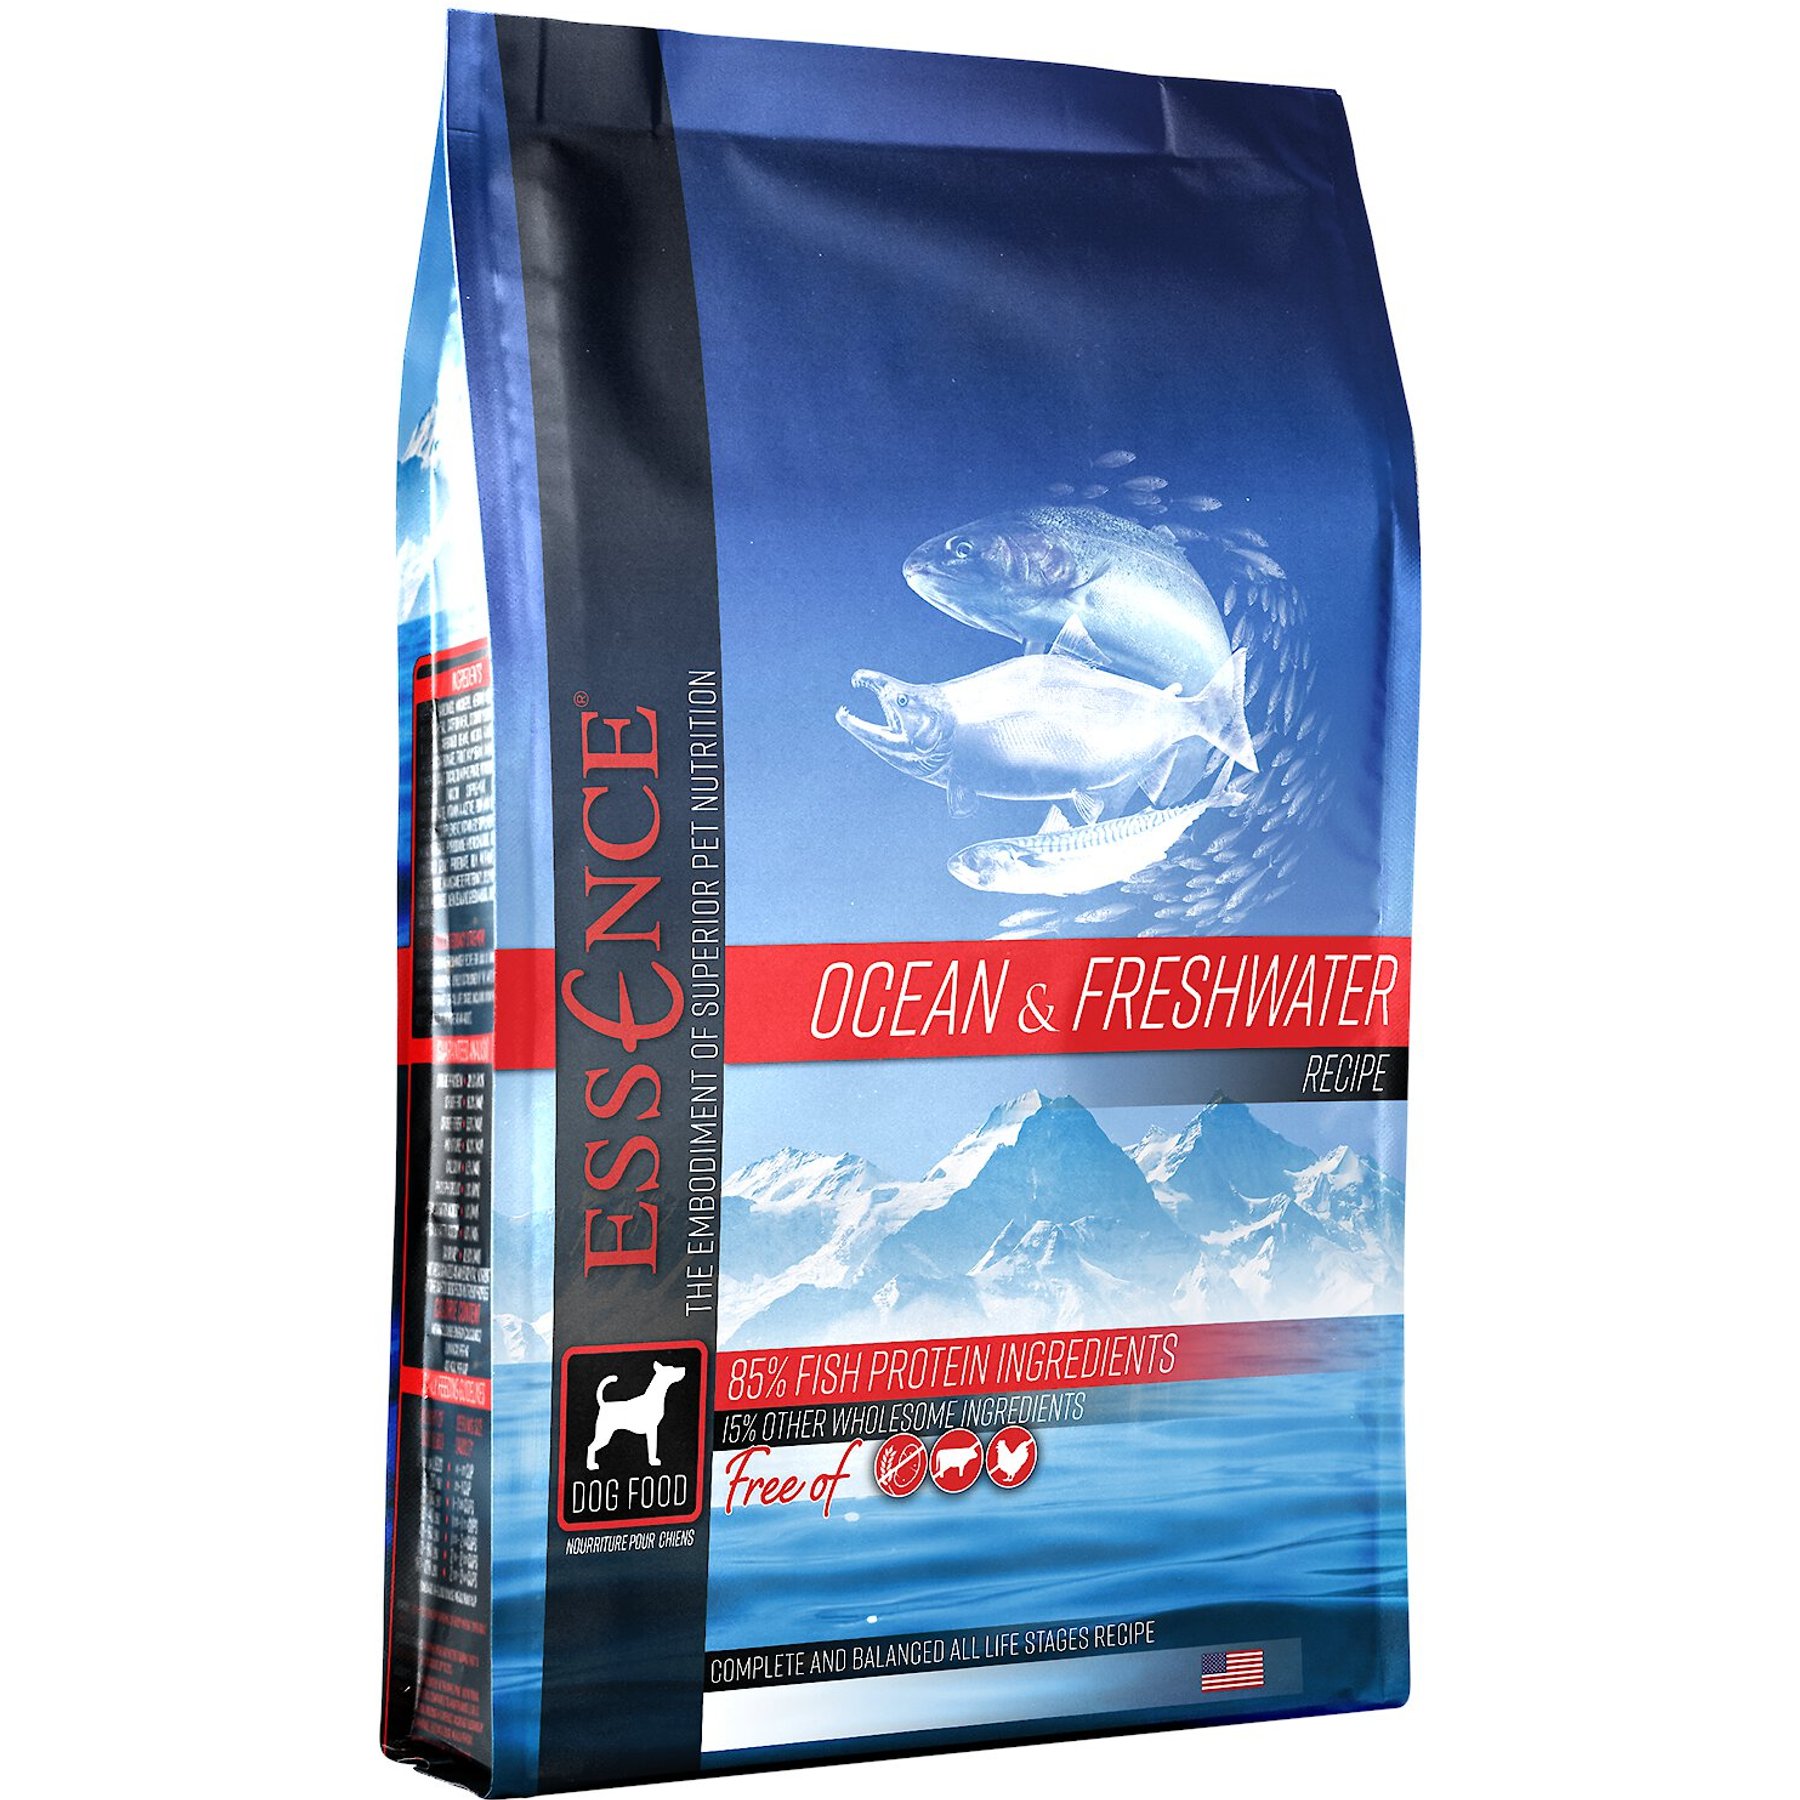 Essence Air & Gamefowl Grain-Free Dry Dog Food, 12.5-lb